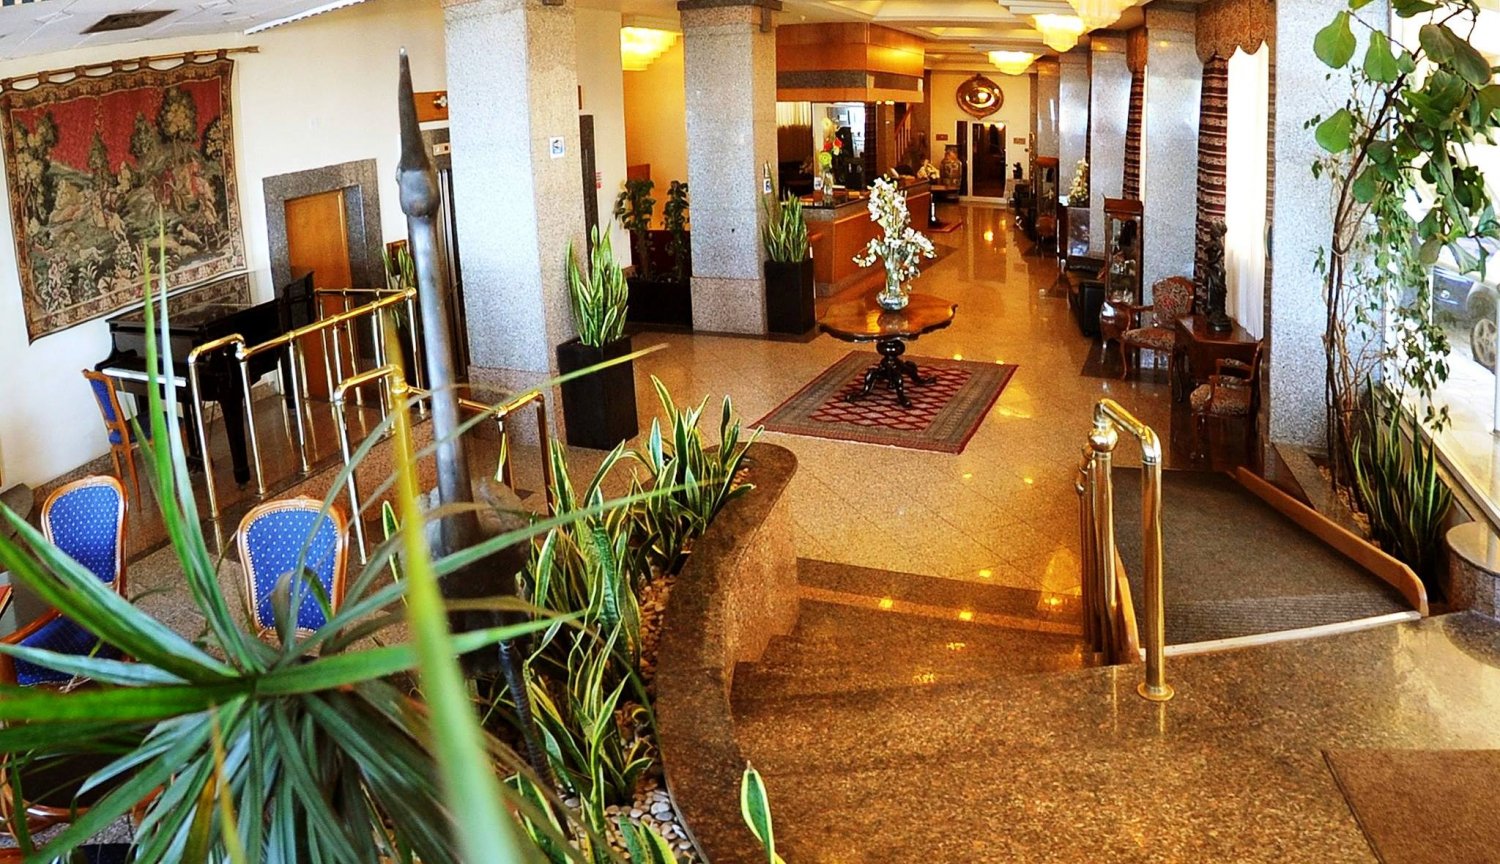 The Diplomat Hotel